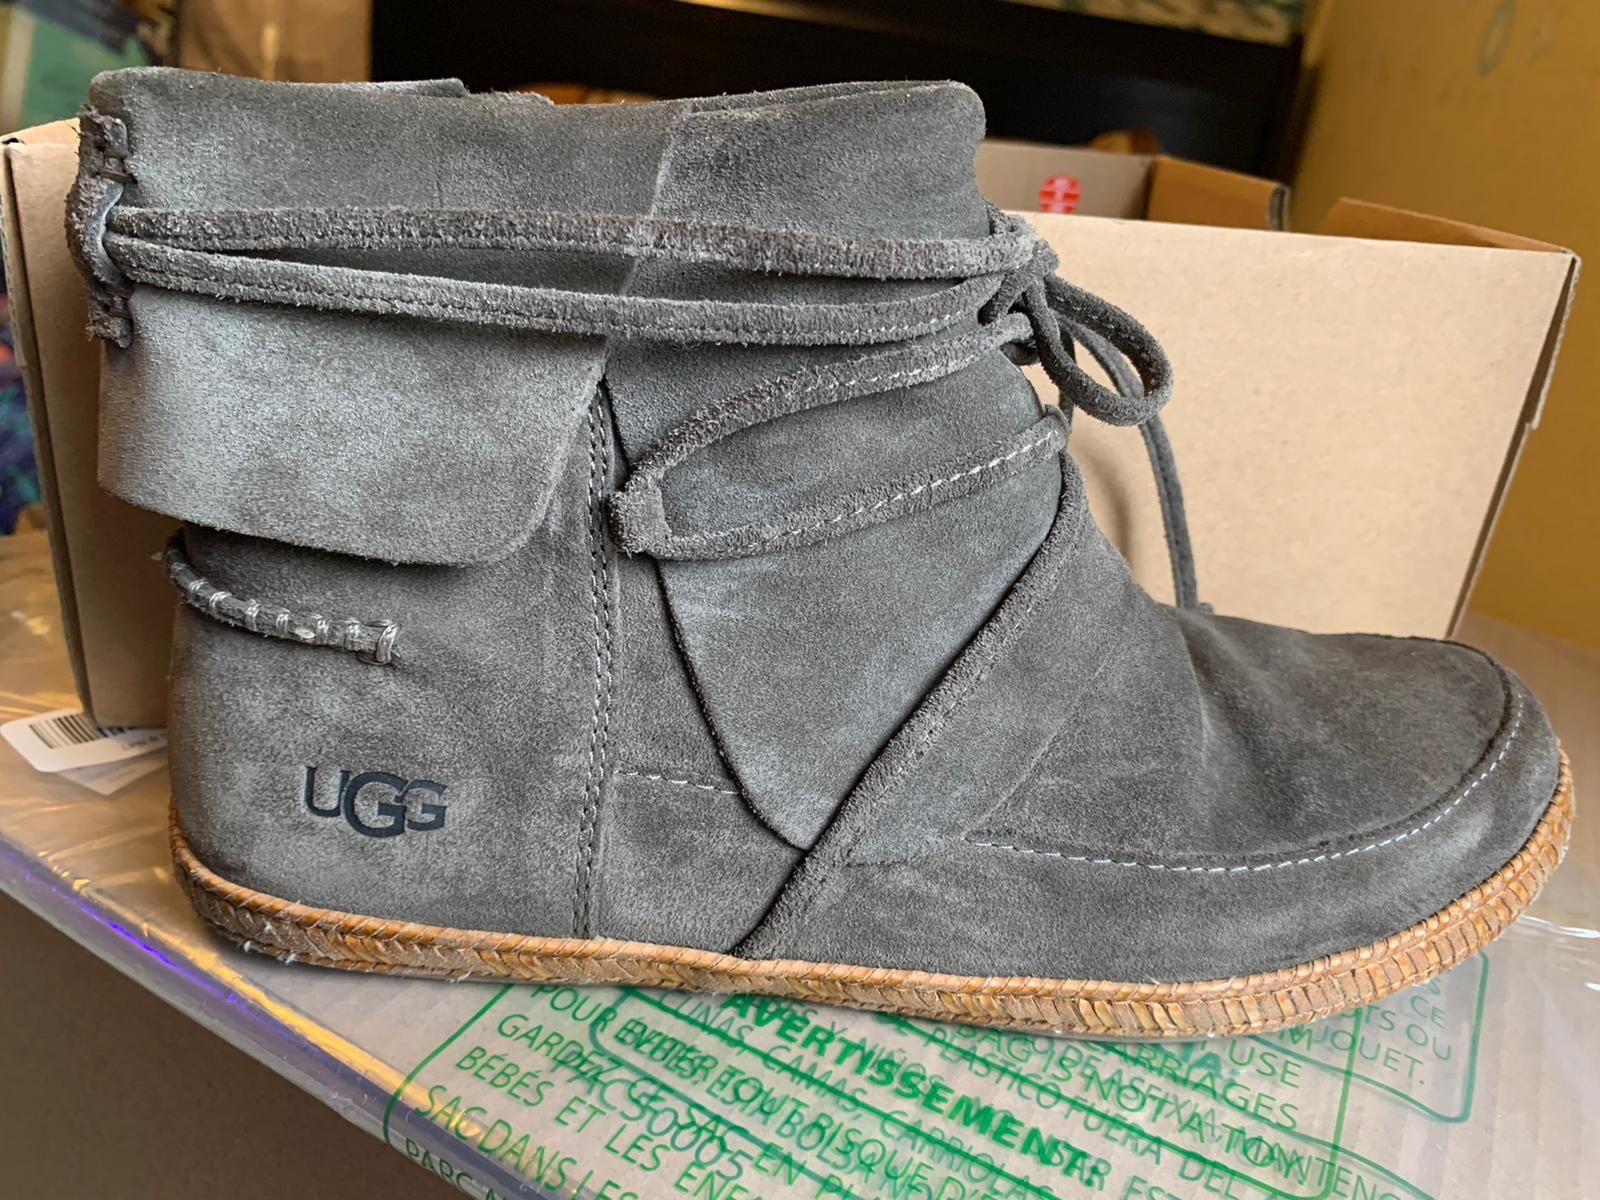 Ugg boots like new